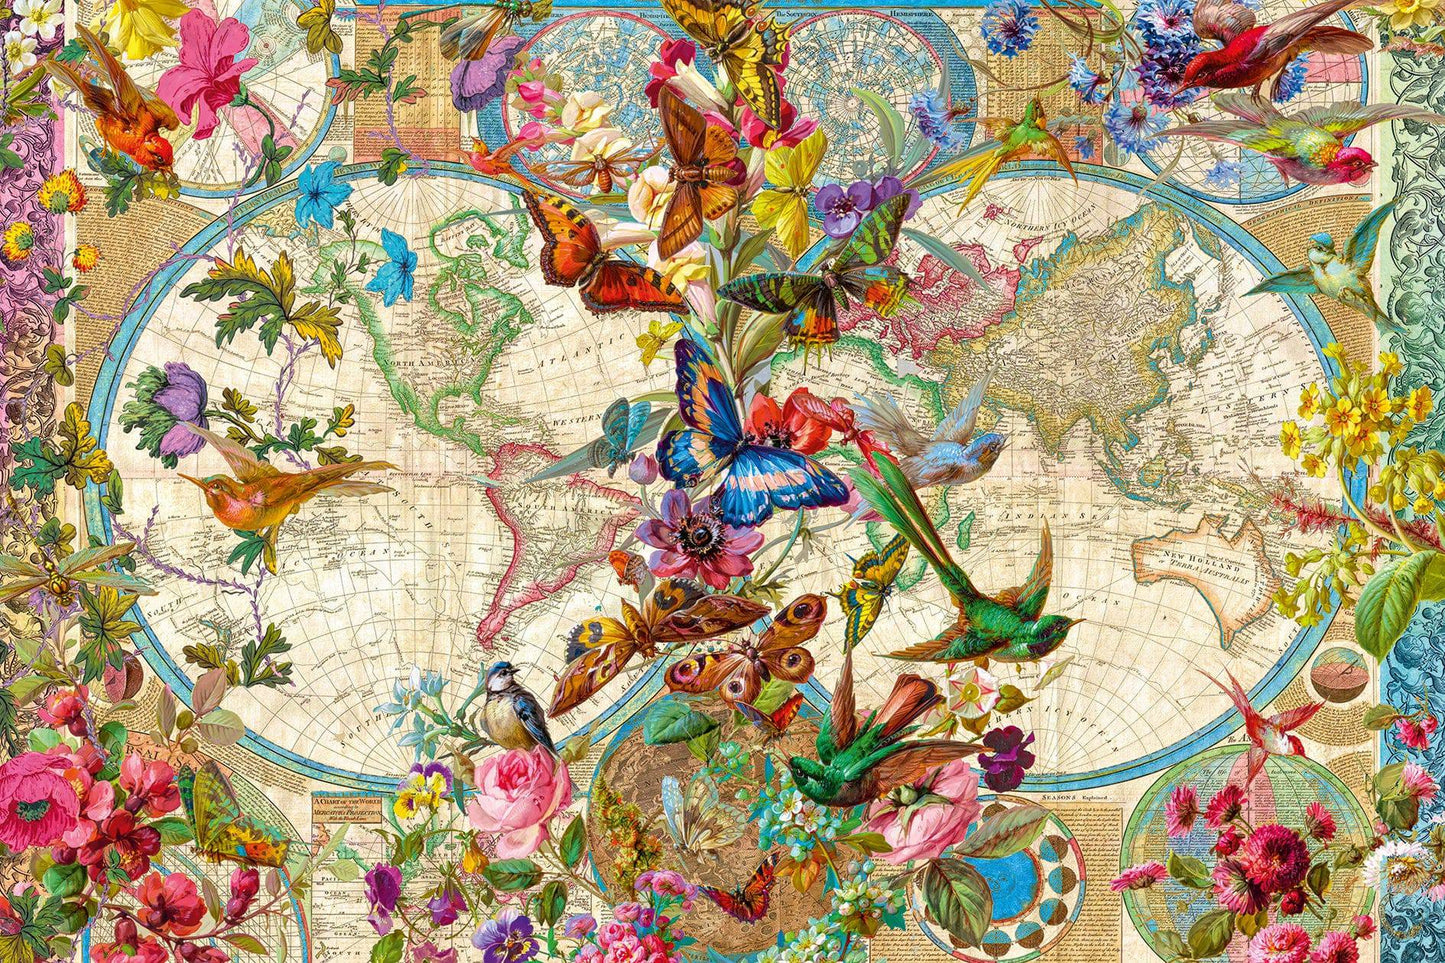 Ravensburger - Flora & Fauna World Map Puzzle 3000pc